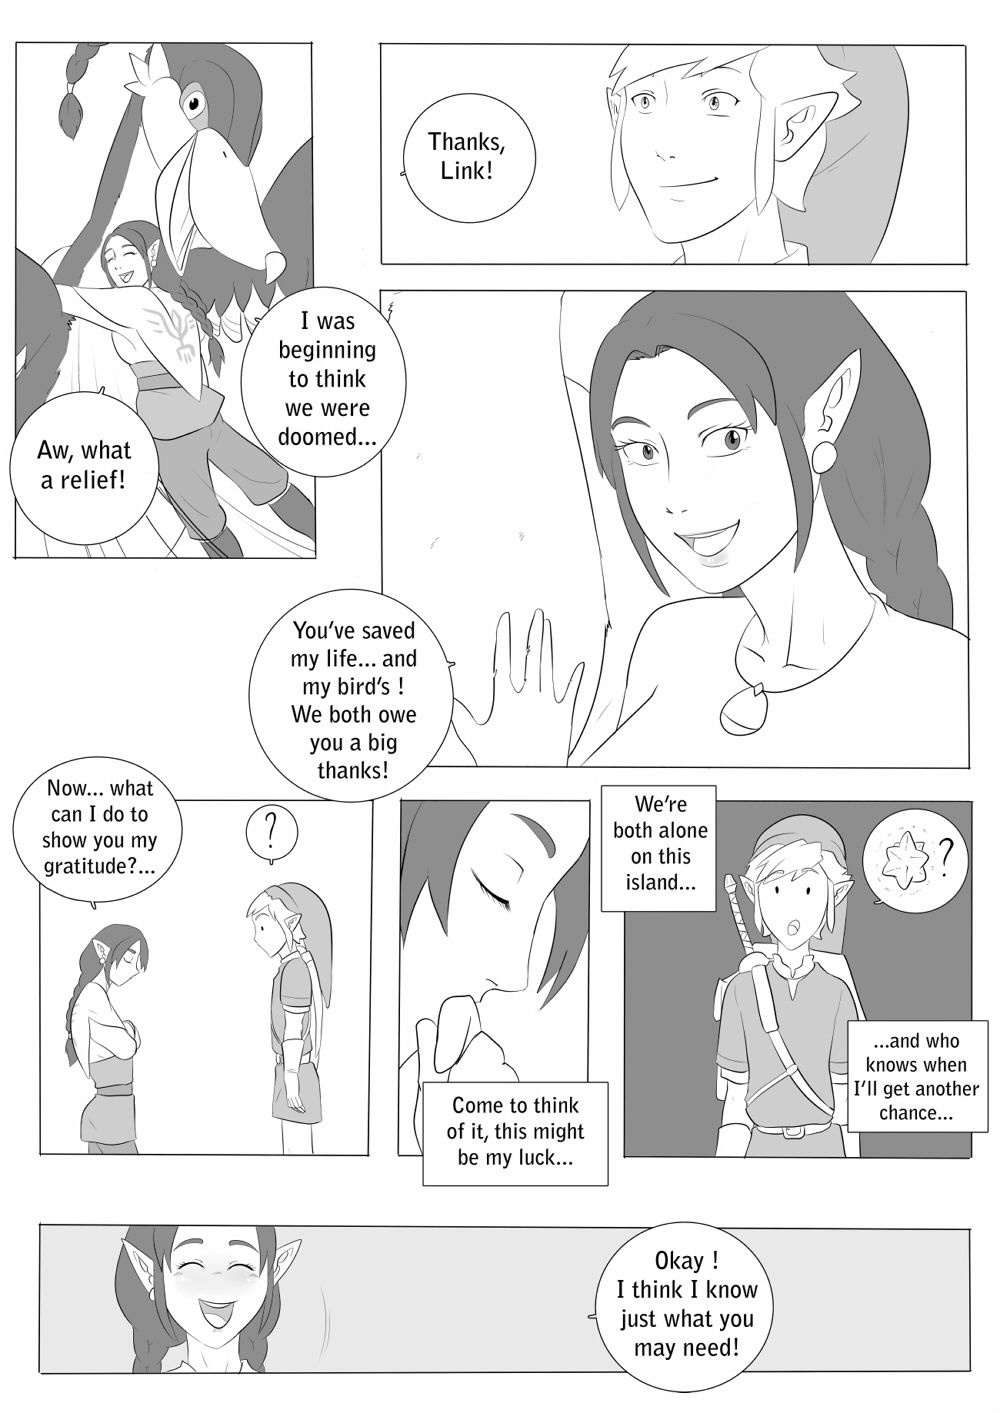 [Oo_Sebastian_oO] A Link Between Girls 1 - Orielle (The Legend of Zelda) [Ongoing] 4